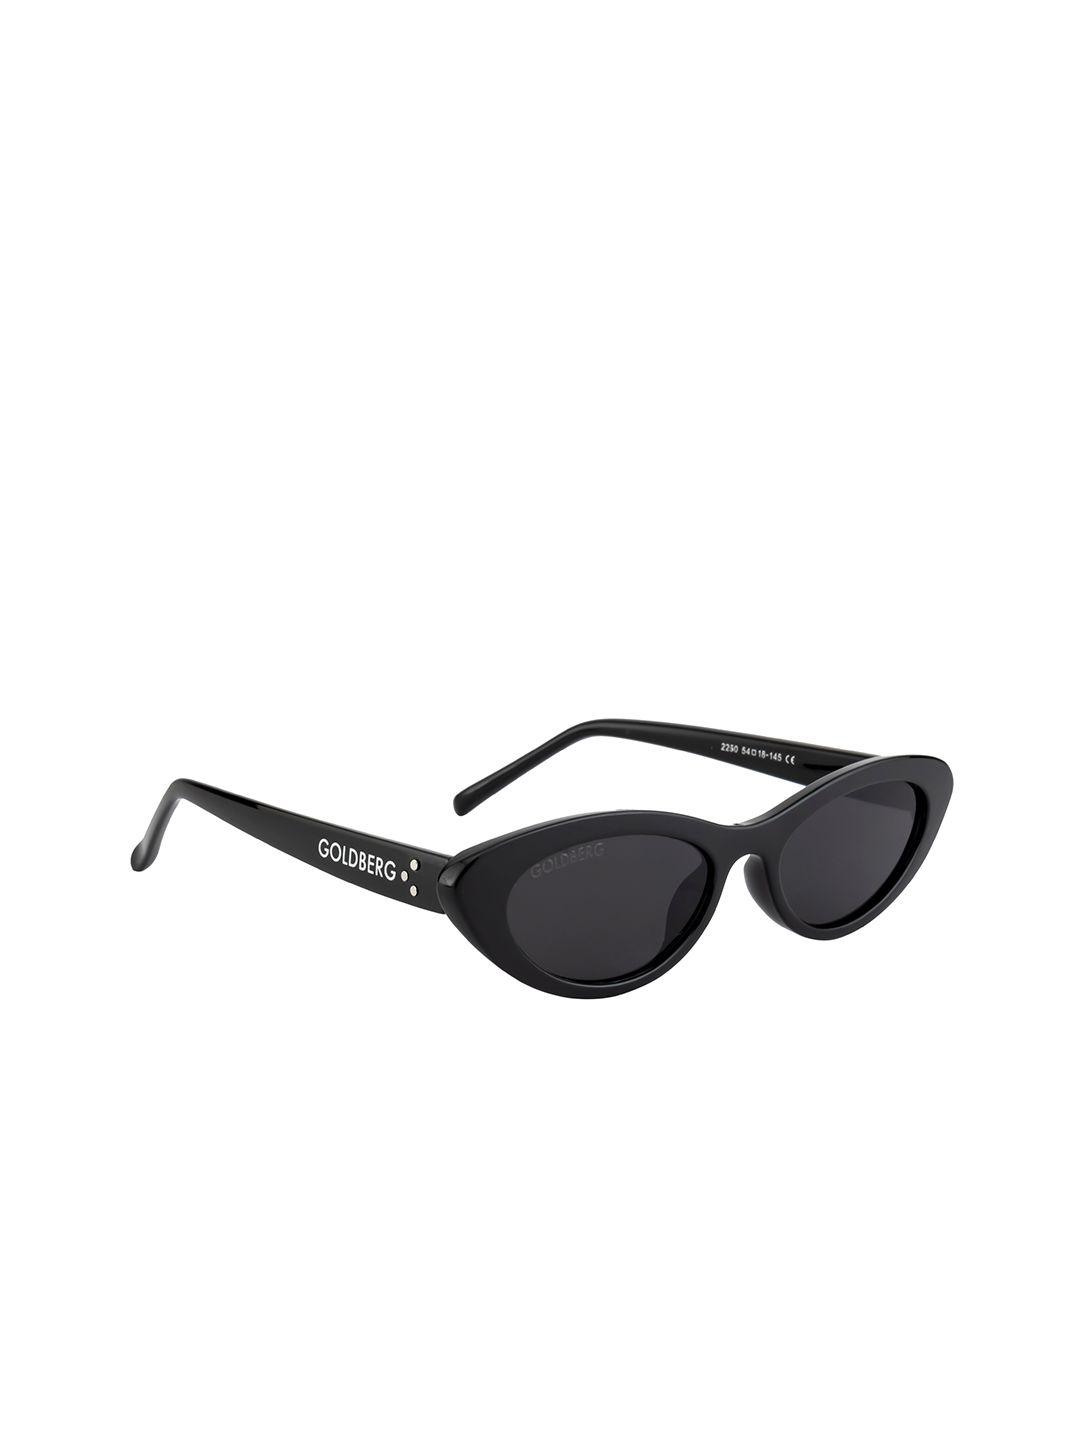 gold berg unisex black lens & black cateye sunglasses with uv protected lens